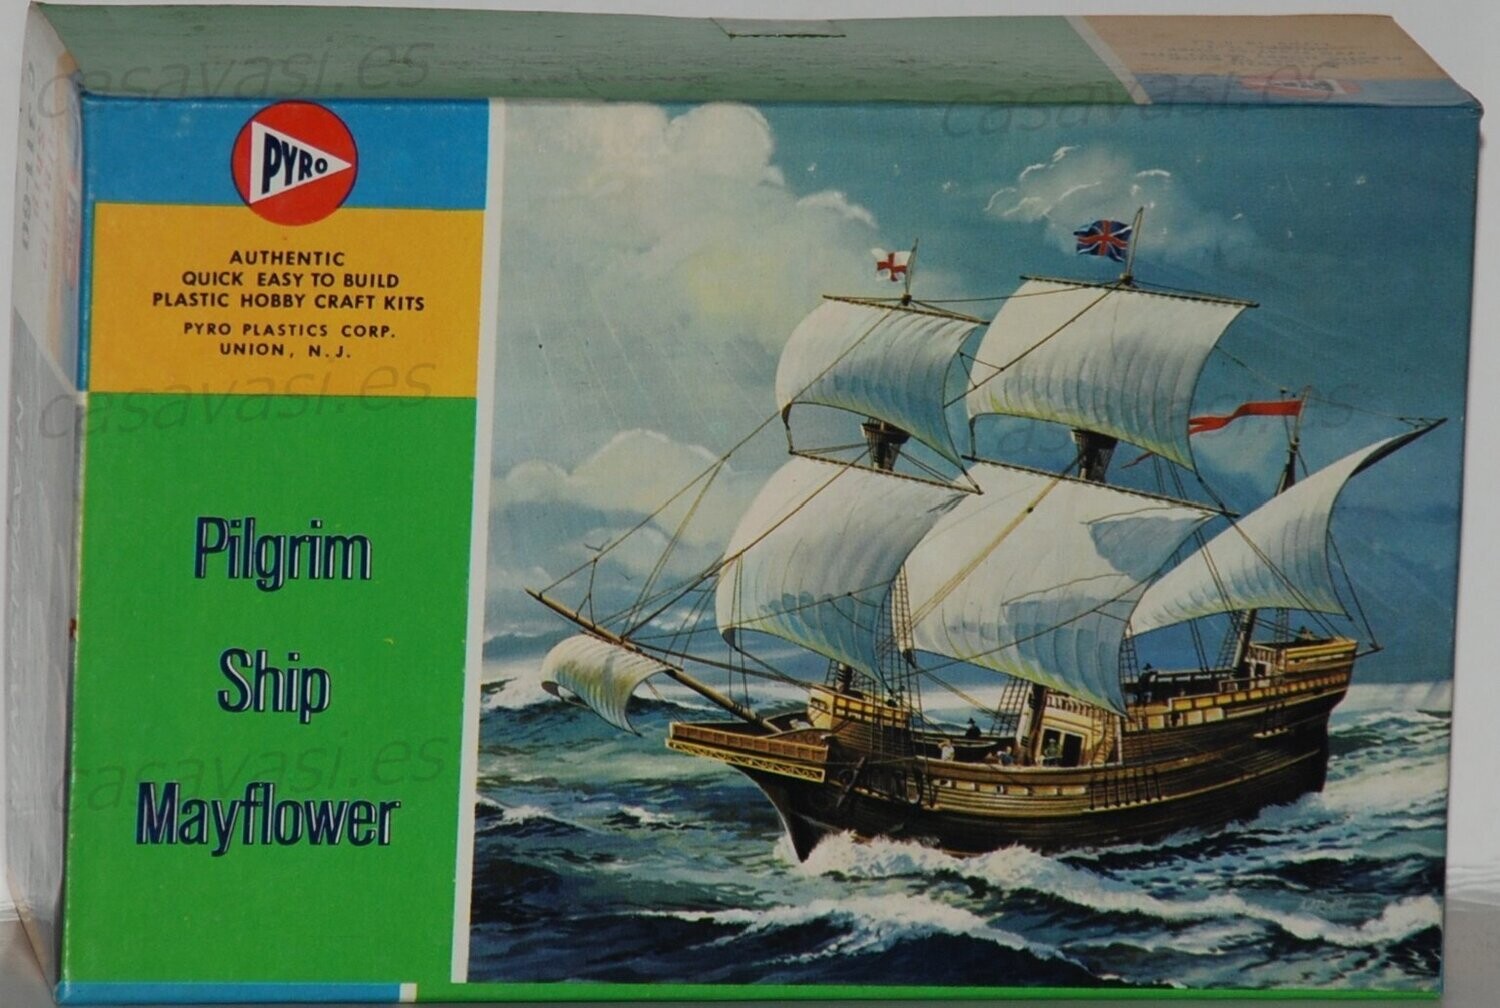 Pyro - c311-60 - Nº 1 - Pilgrim Ship - Mayflower
Box Size 18.5 x 12 cm.